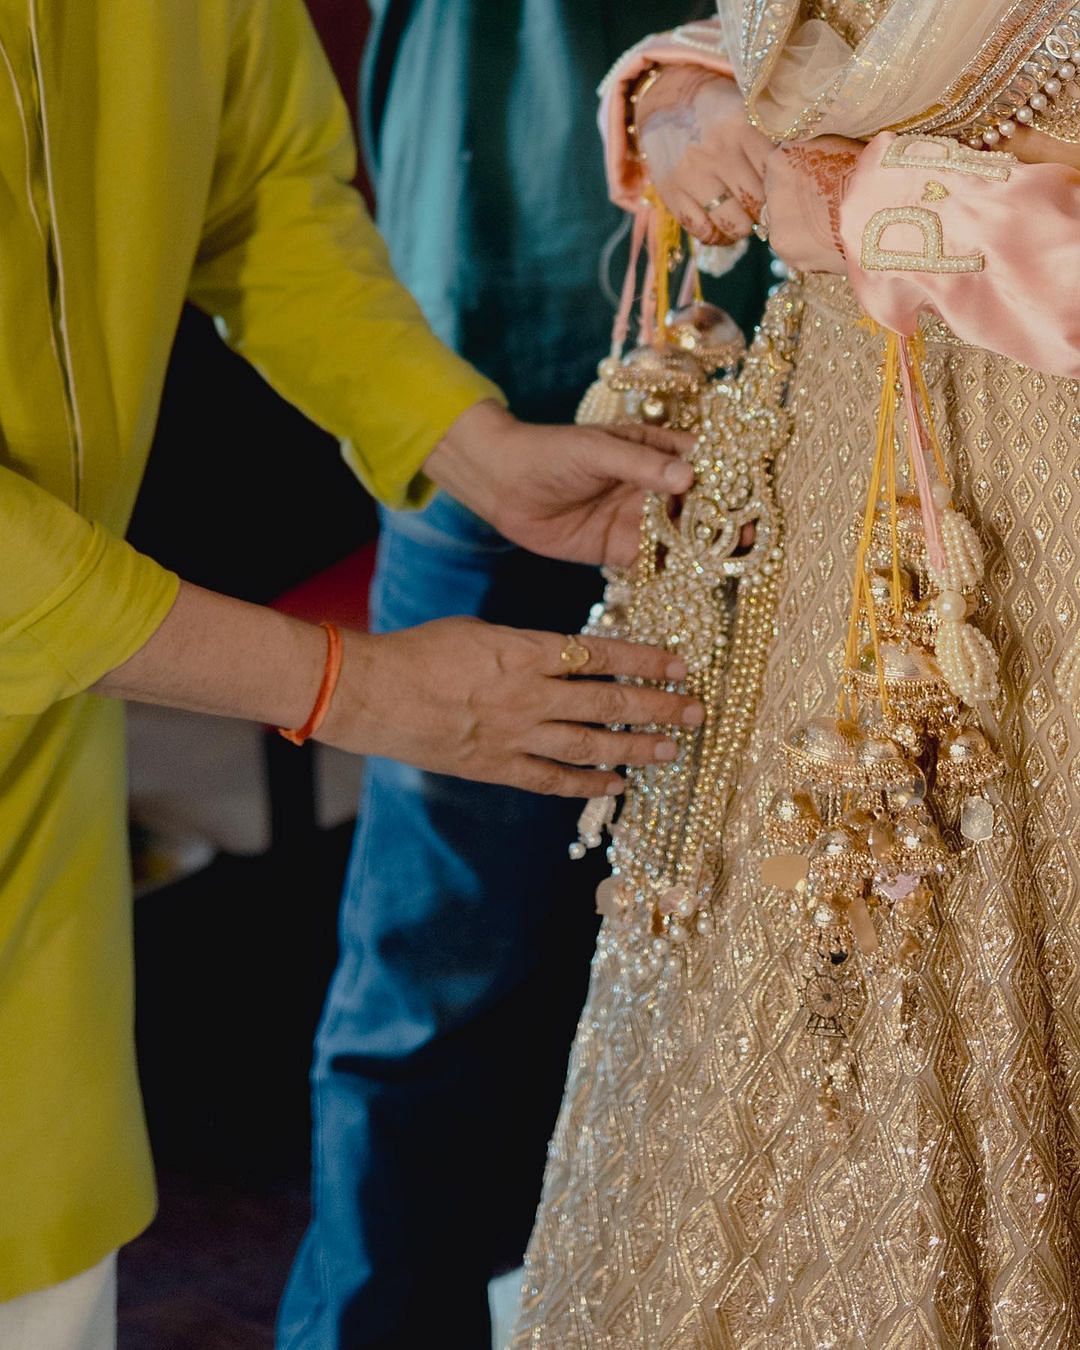 Parineeti Chopra's modern bridal look in ivory Manish Malhotra lehenga:  Decoded - India Today